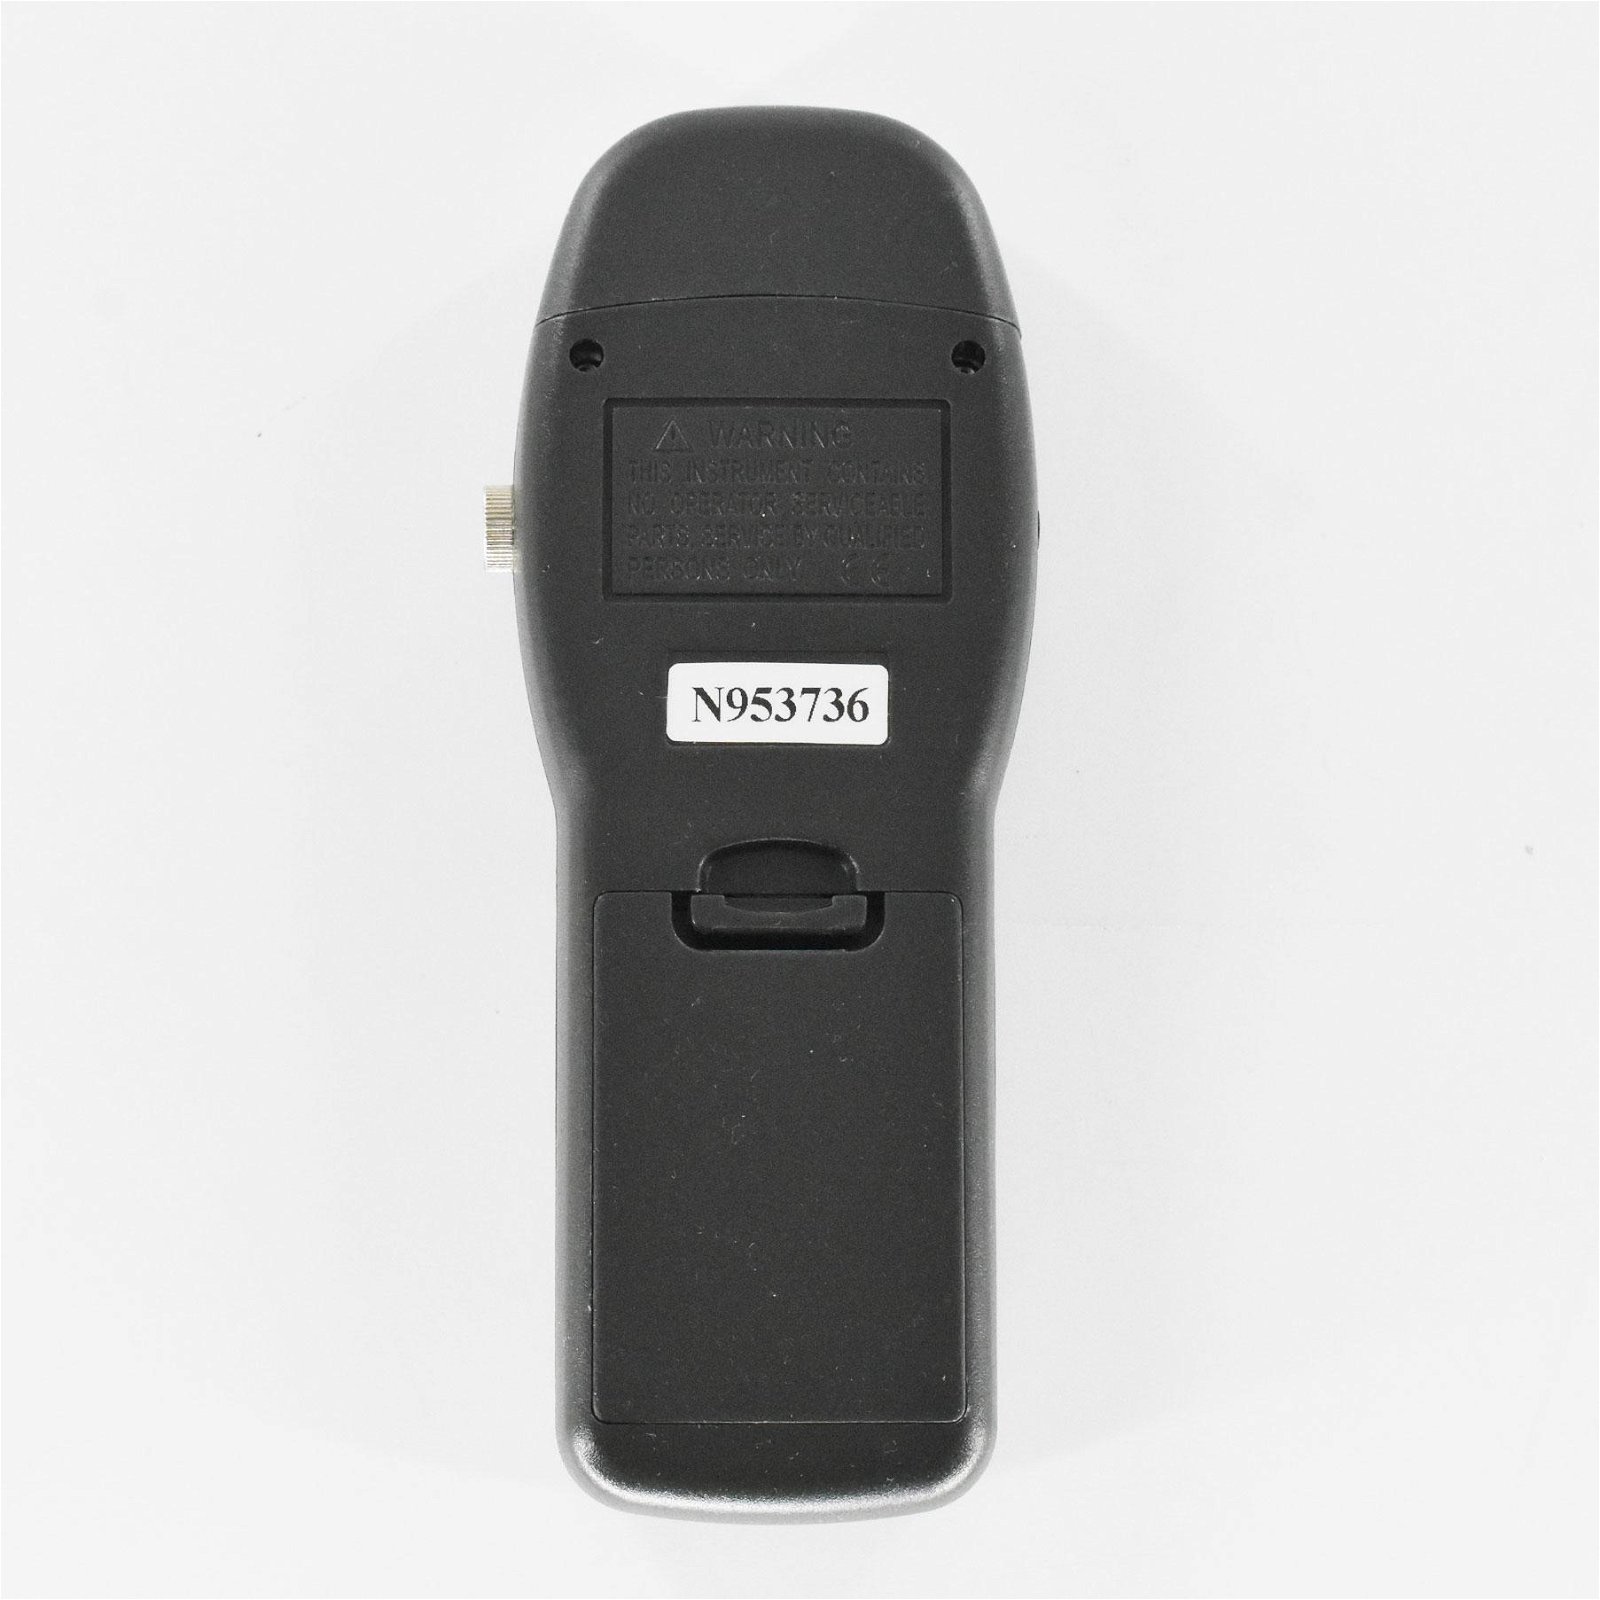 MC-7825COCOA Cocoa Bean Moisture Meter Tester 0-24% Water Measurement Analyzer 3